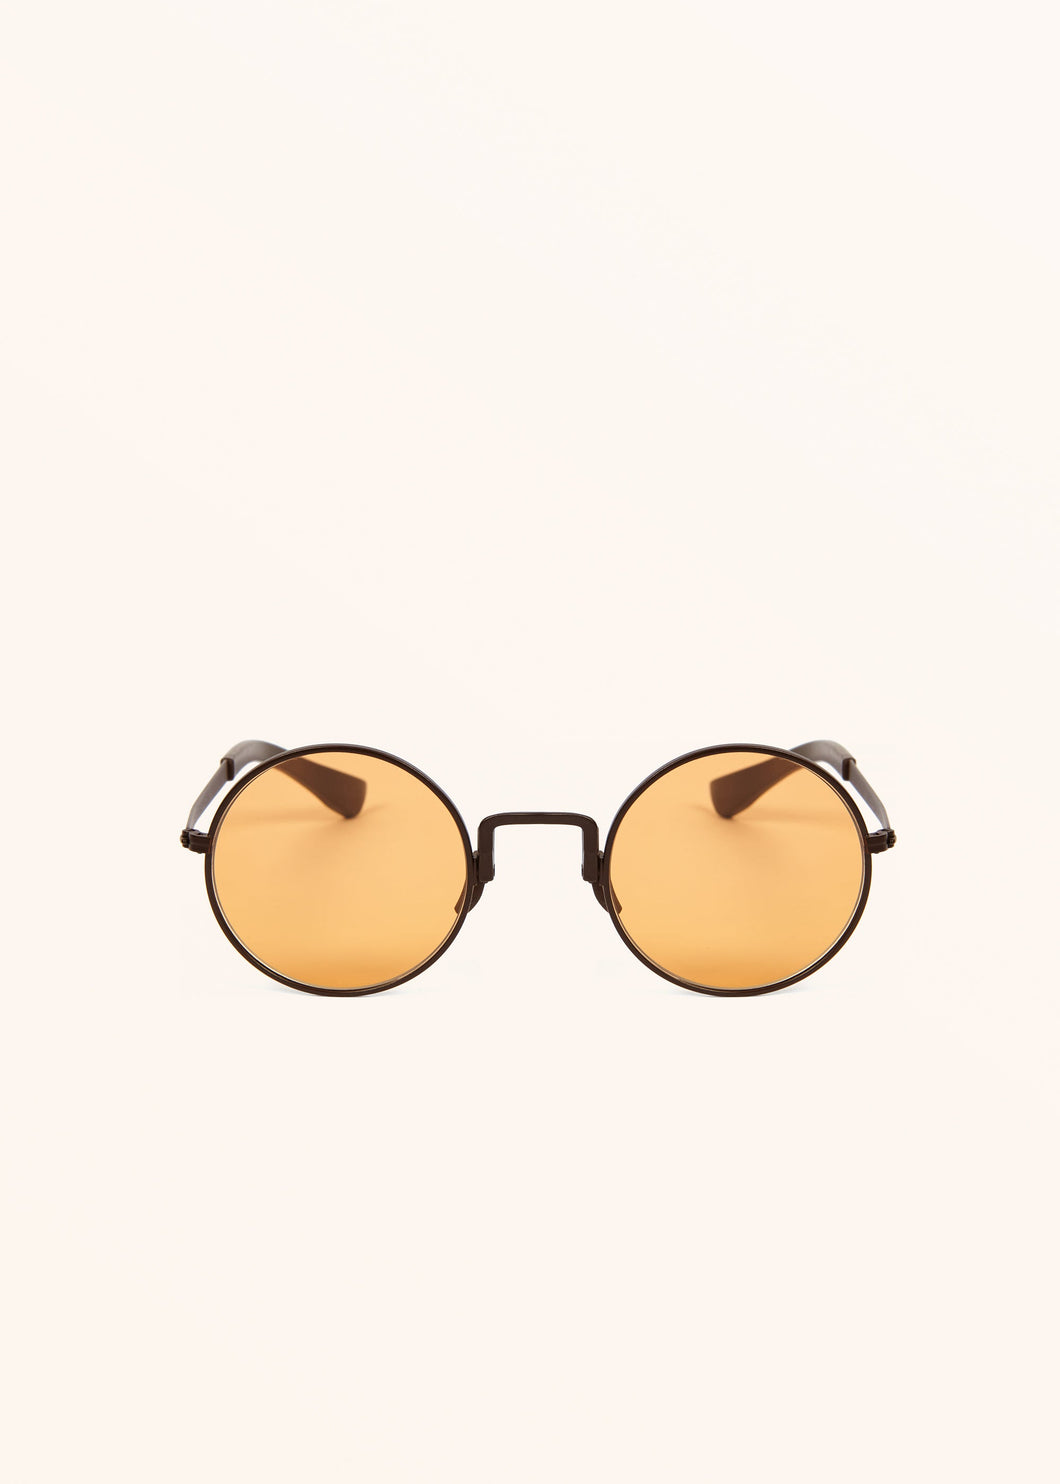 Kiton sunglasses for man